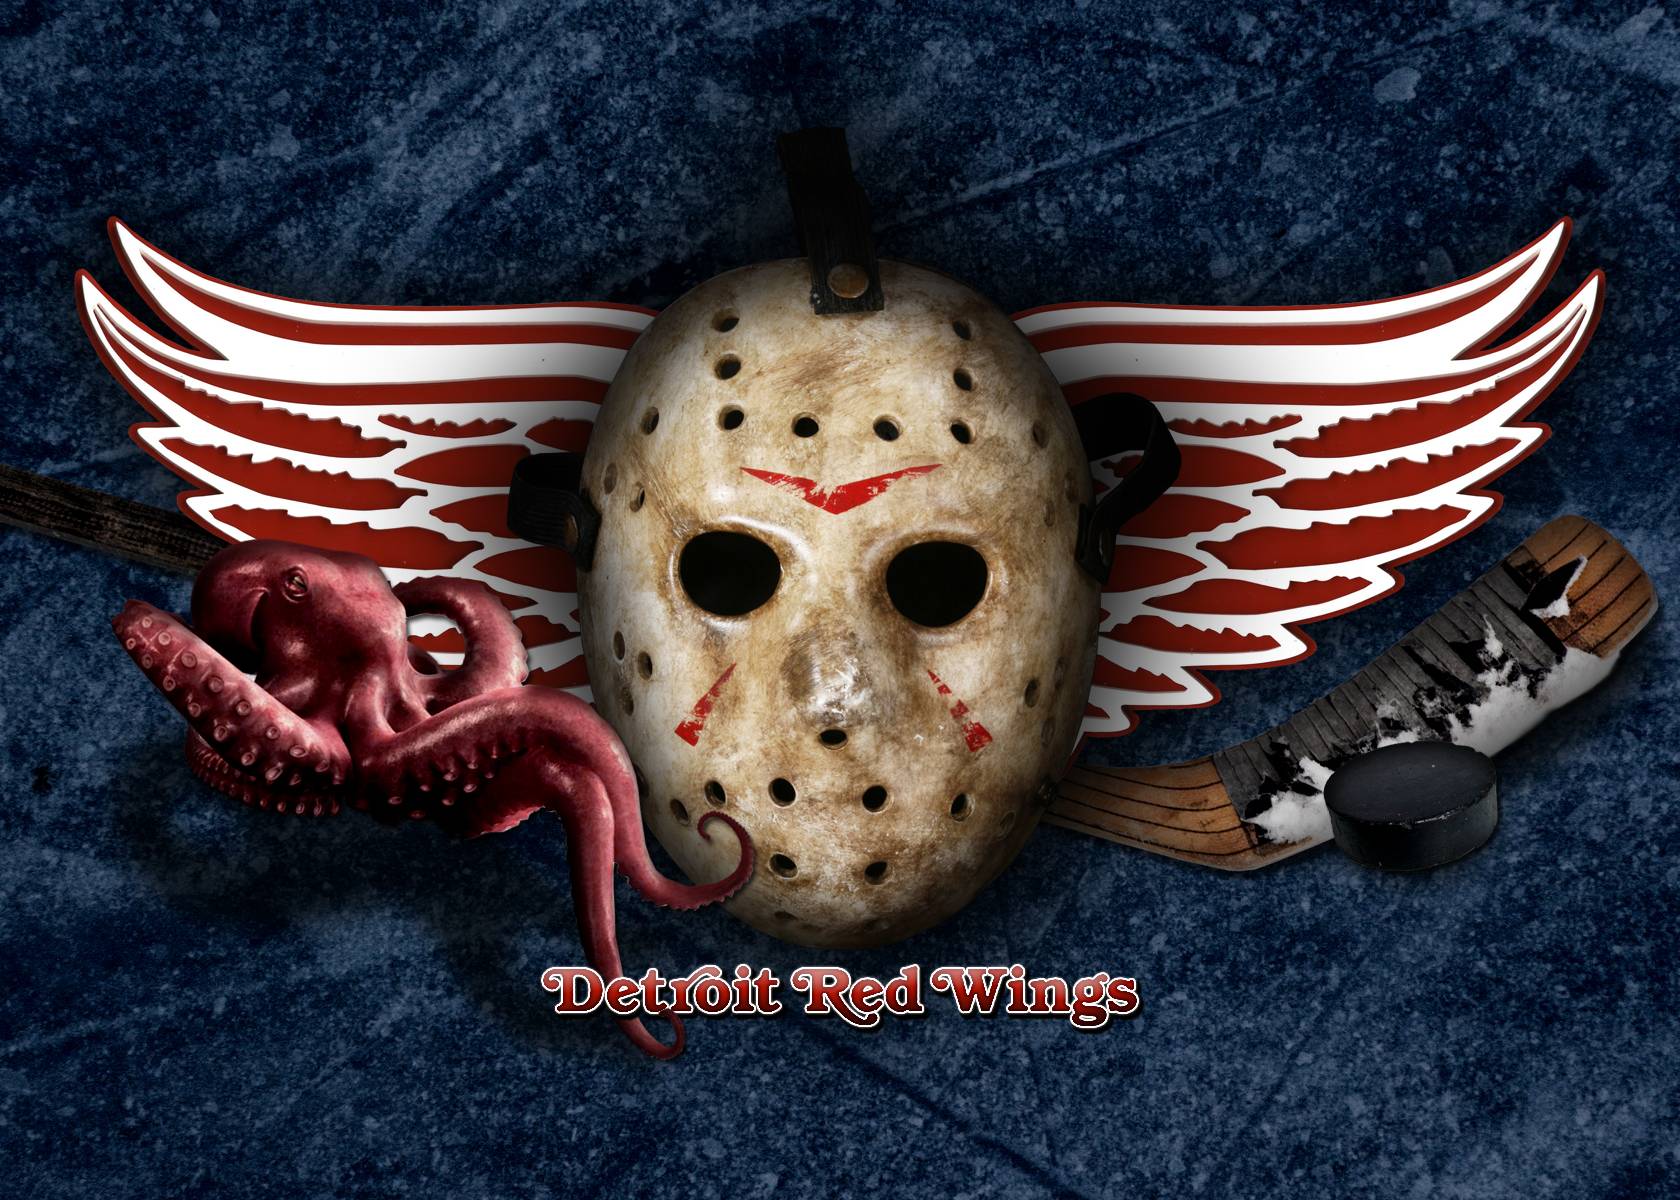 Free Detroit Red Wings desktop image. Detroit Red Wings wallpaper